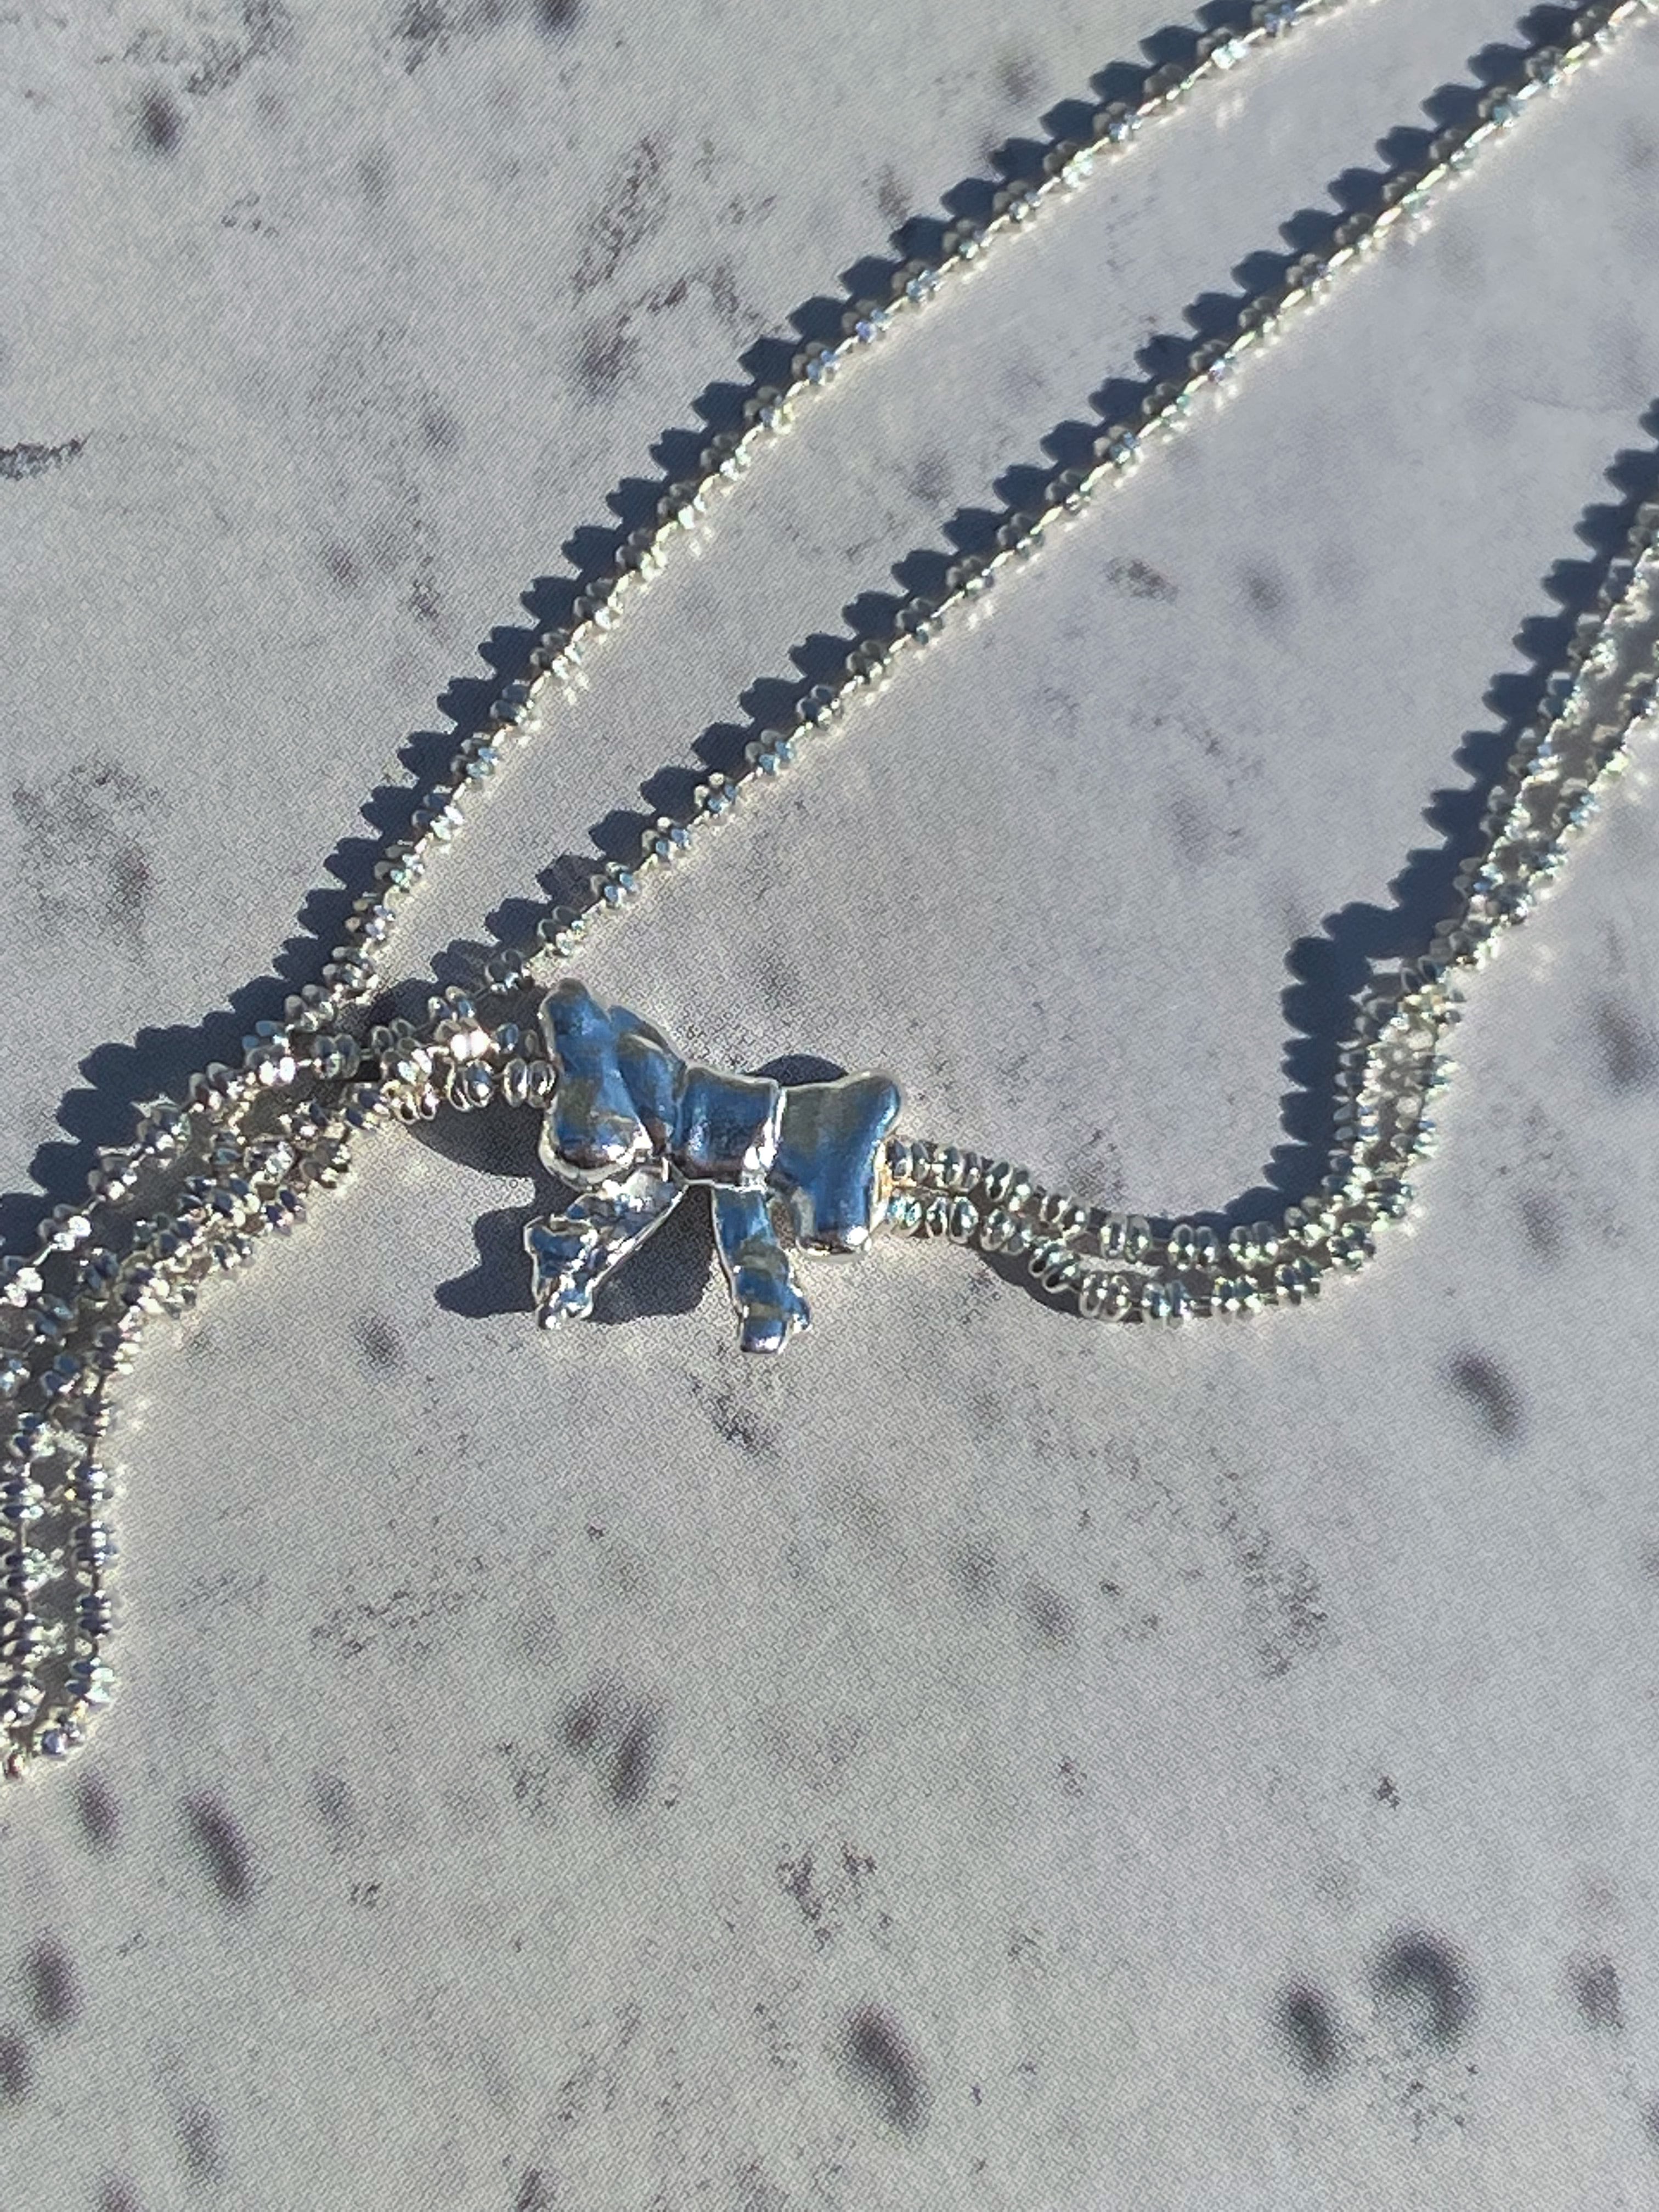 ribbone necklace プレーン silver925 LJ22044N